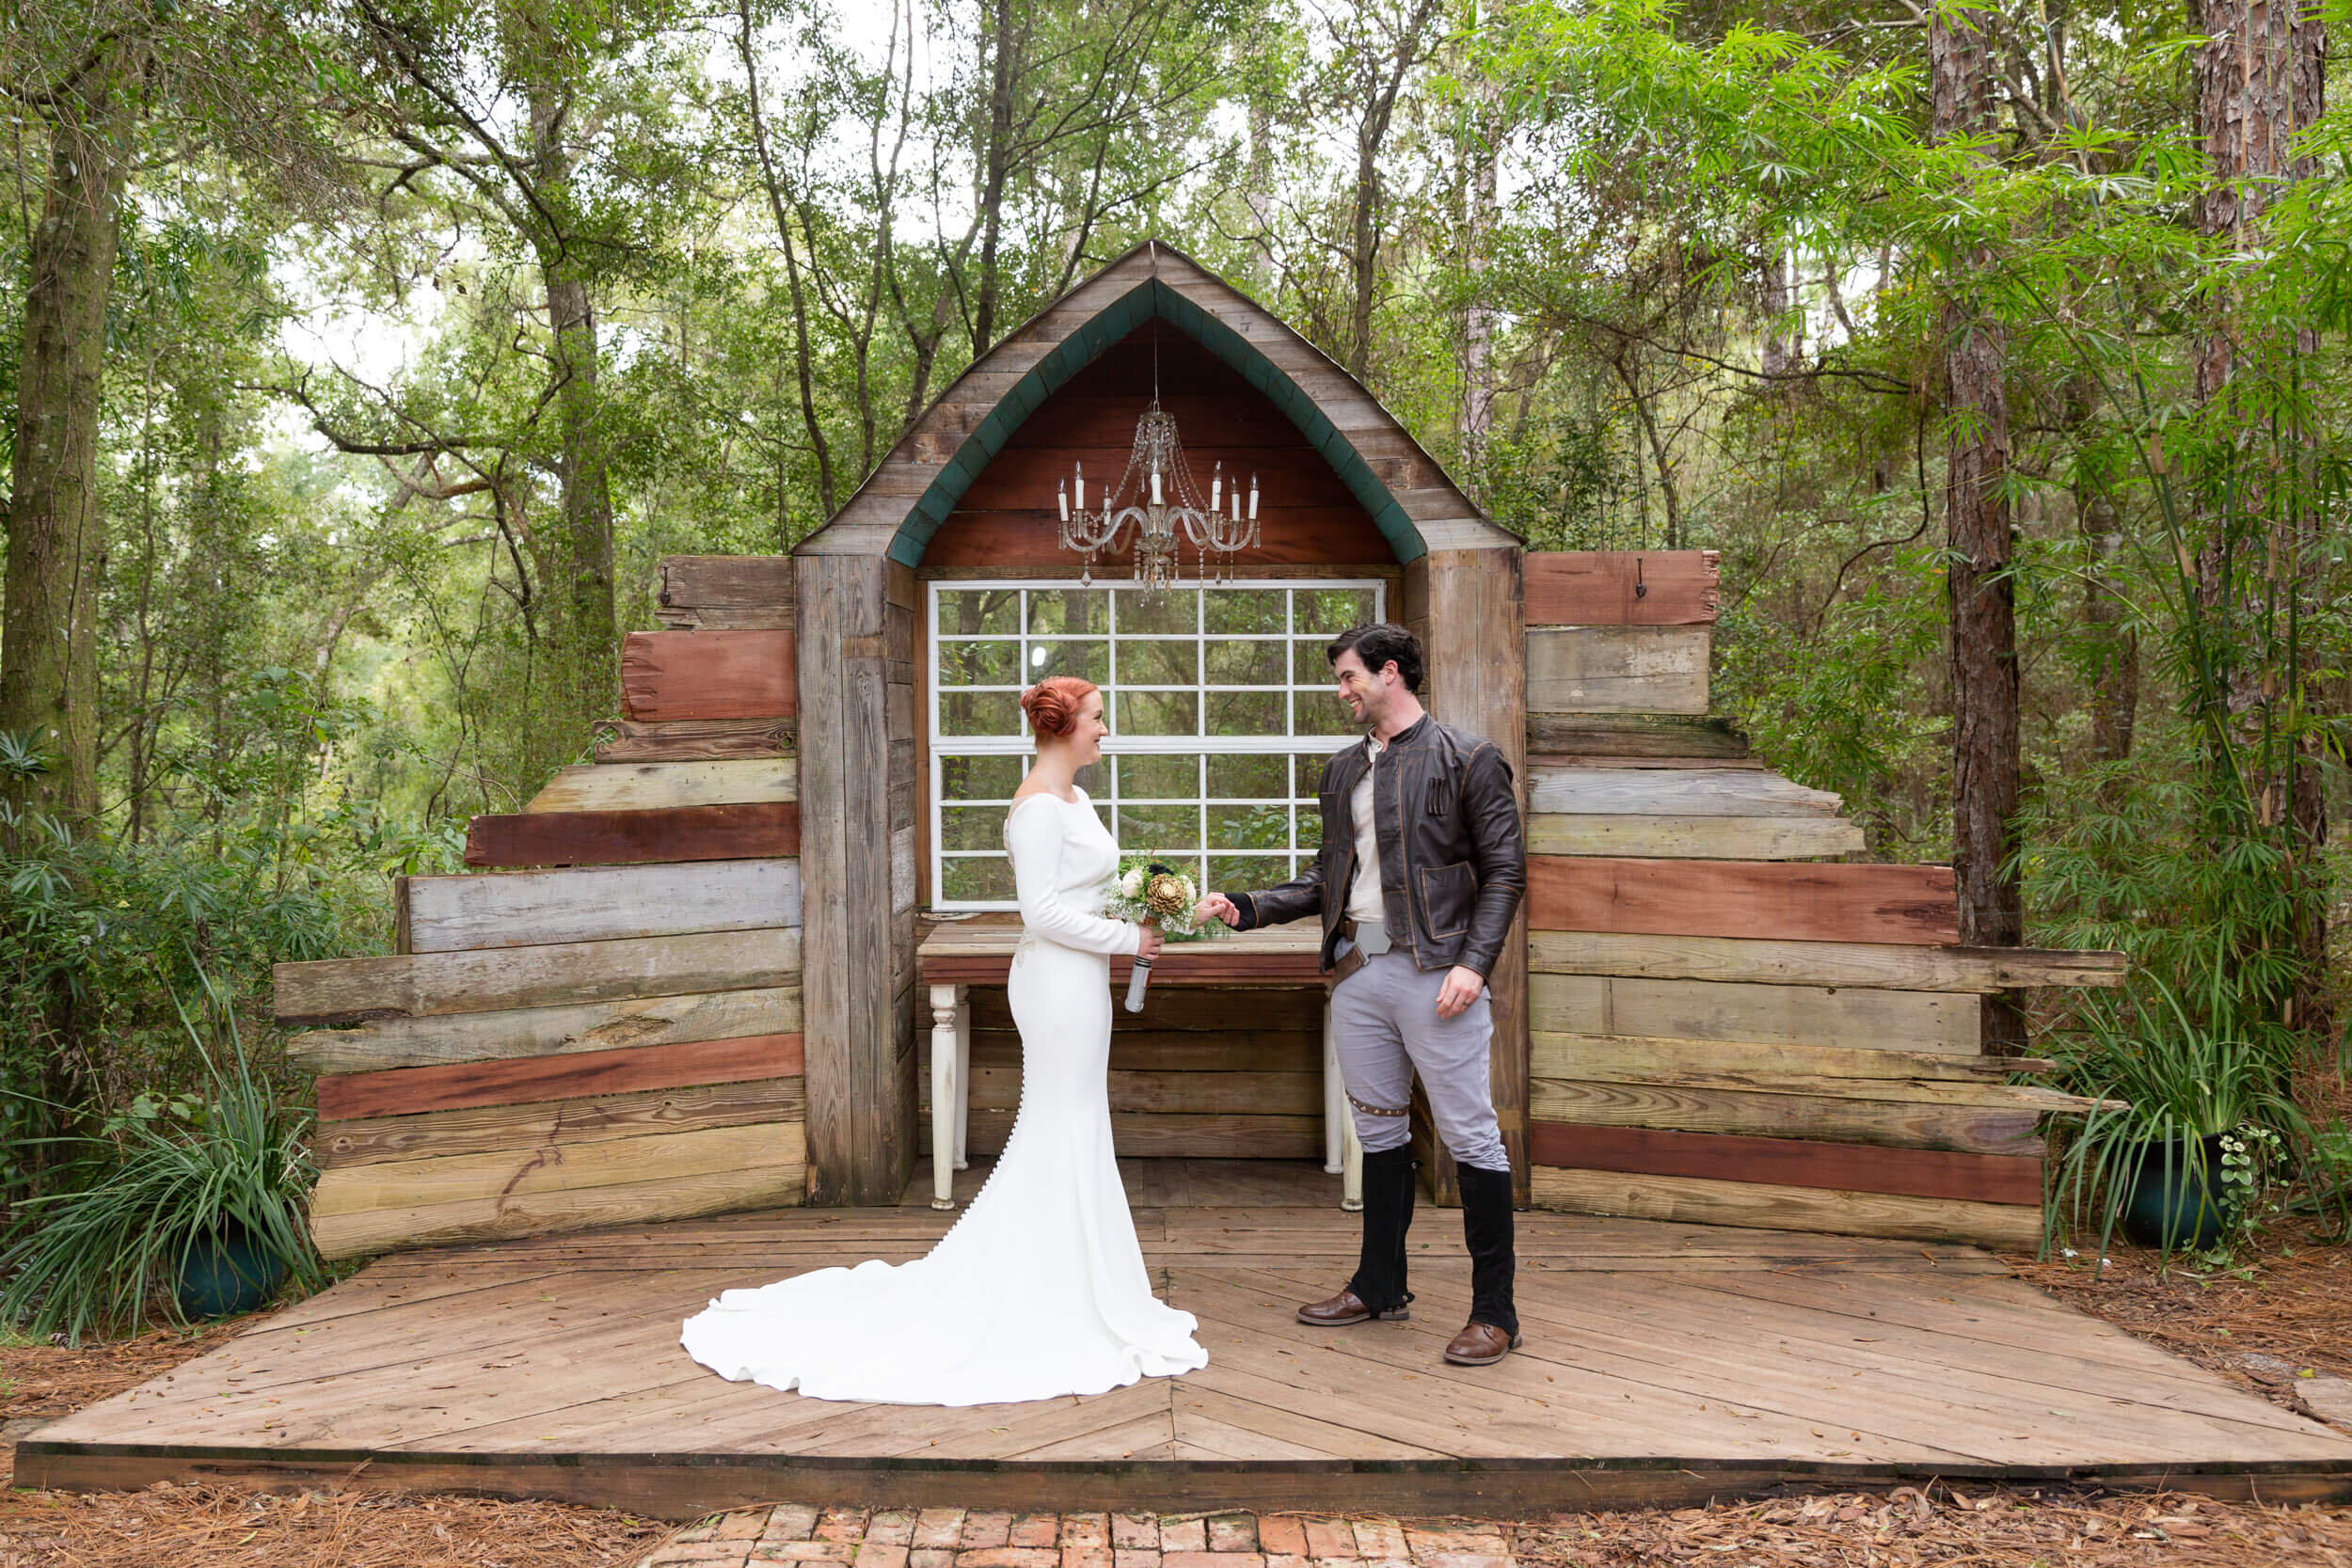  Star Wars Wedding Styled Shoot at Bridle Oaks Barn, Deland, Florida 